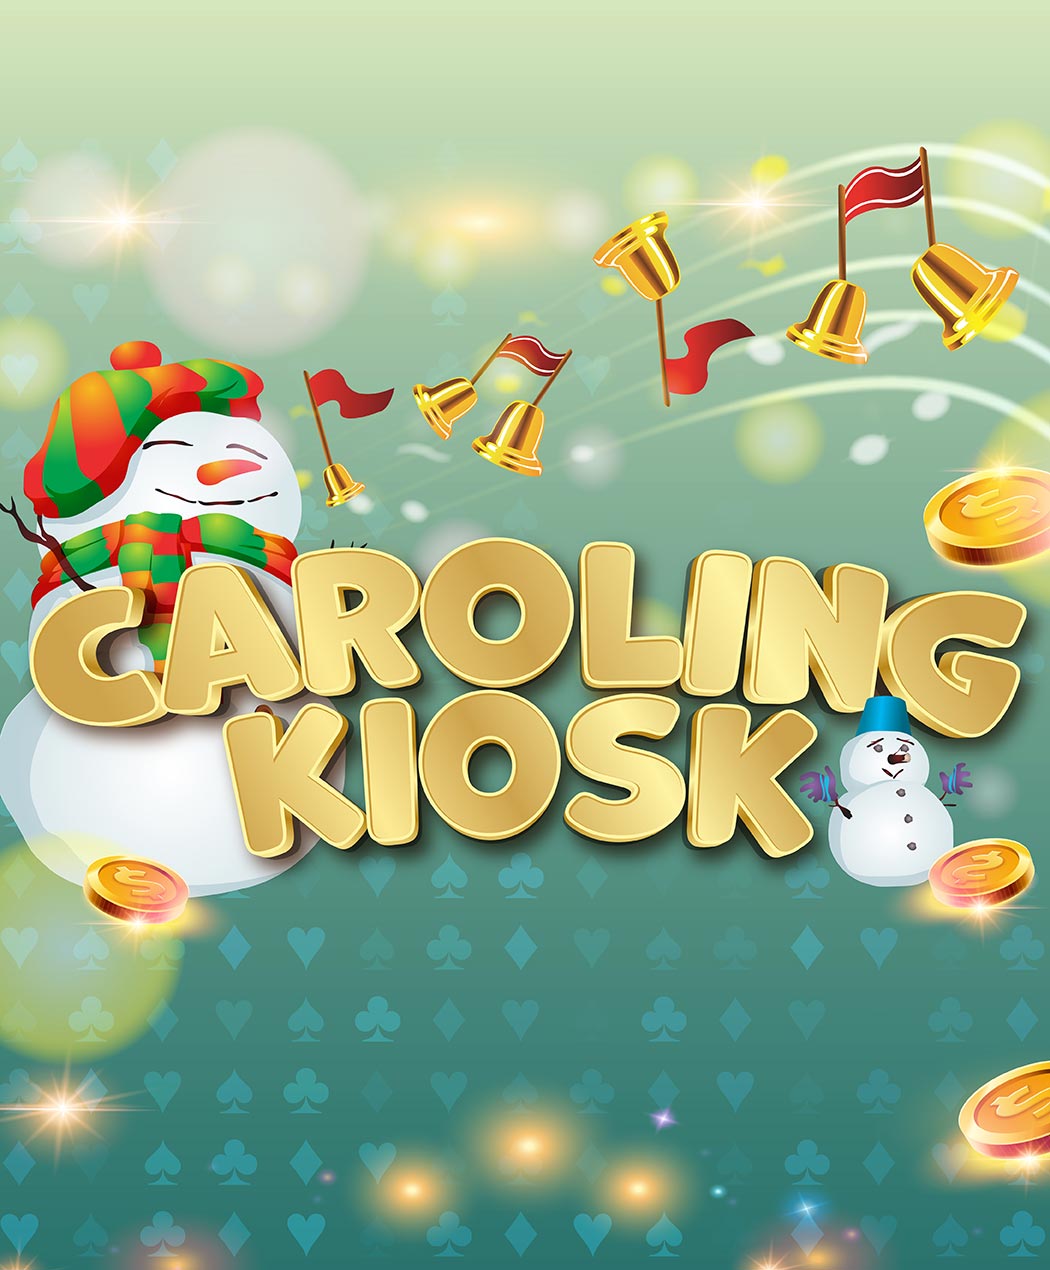 Caroling Kiosk